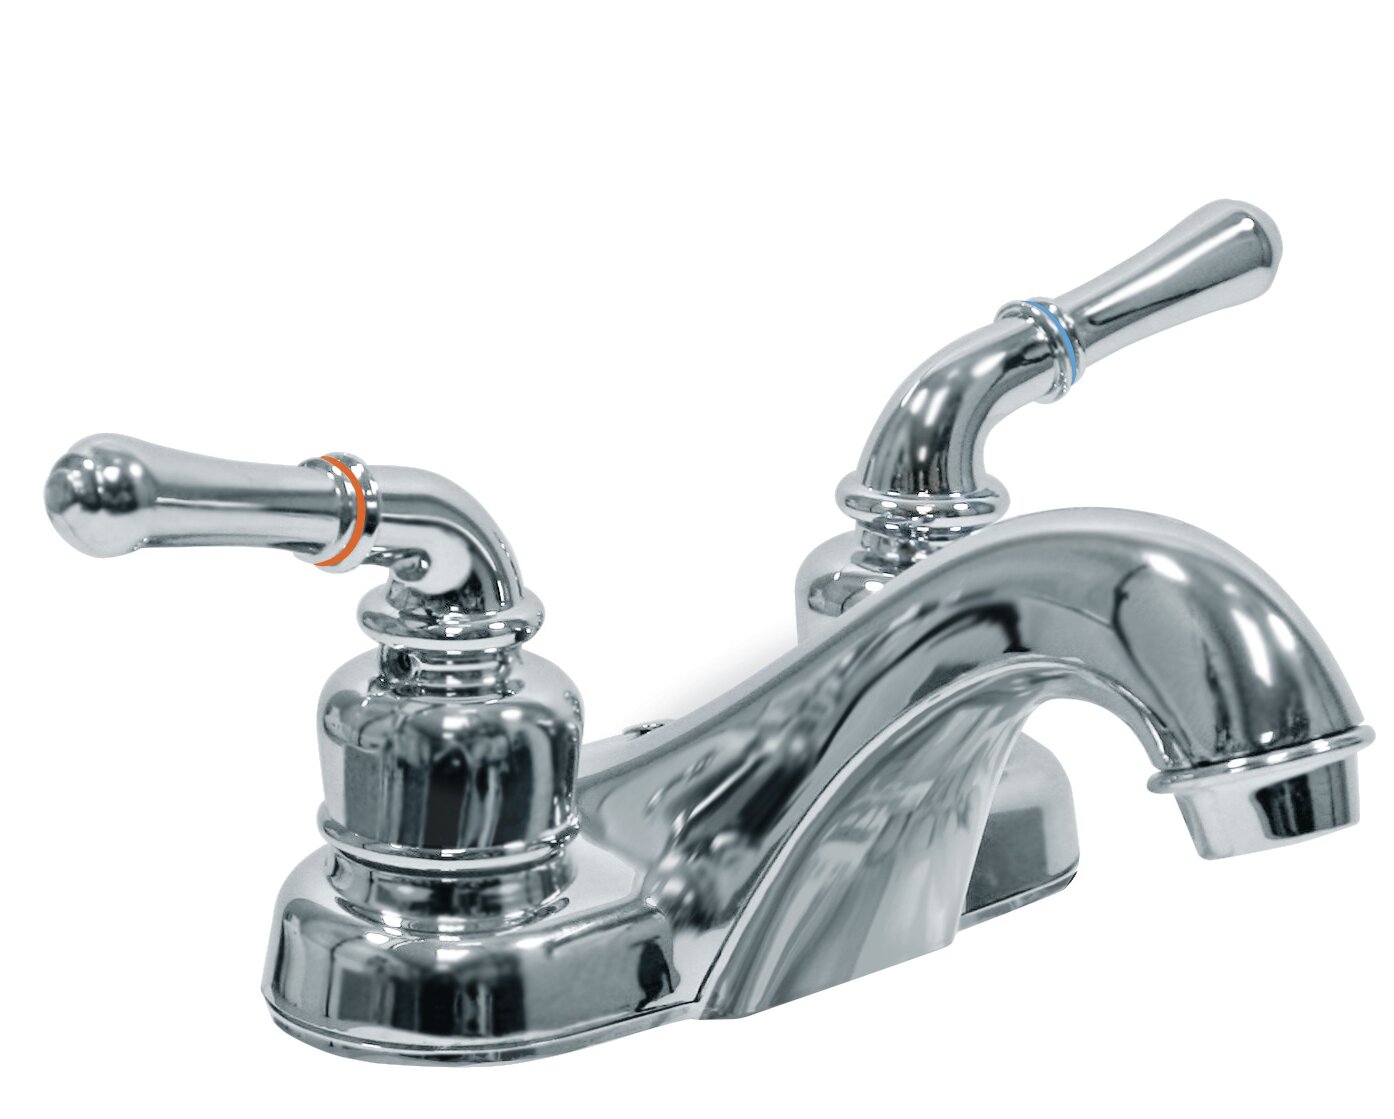 Aqua Plumb Teapot Handle Centerset Bathroom Faucet With Drain Assembly Reviews Wayfair Ca